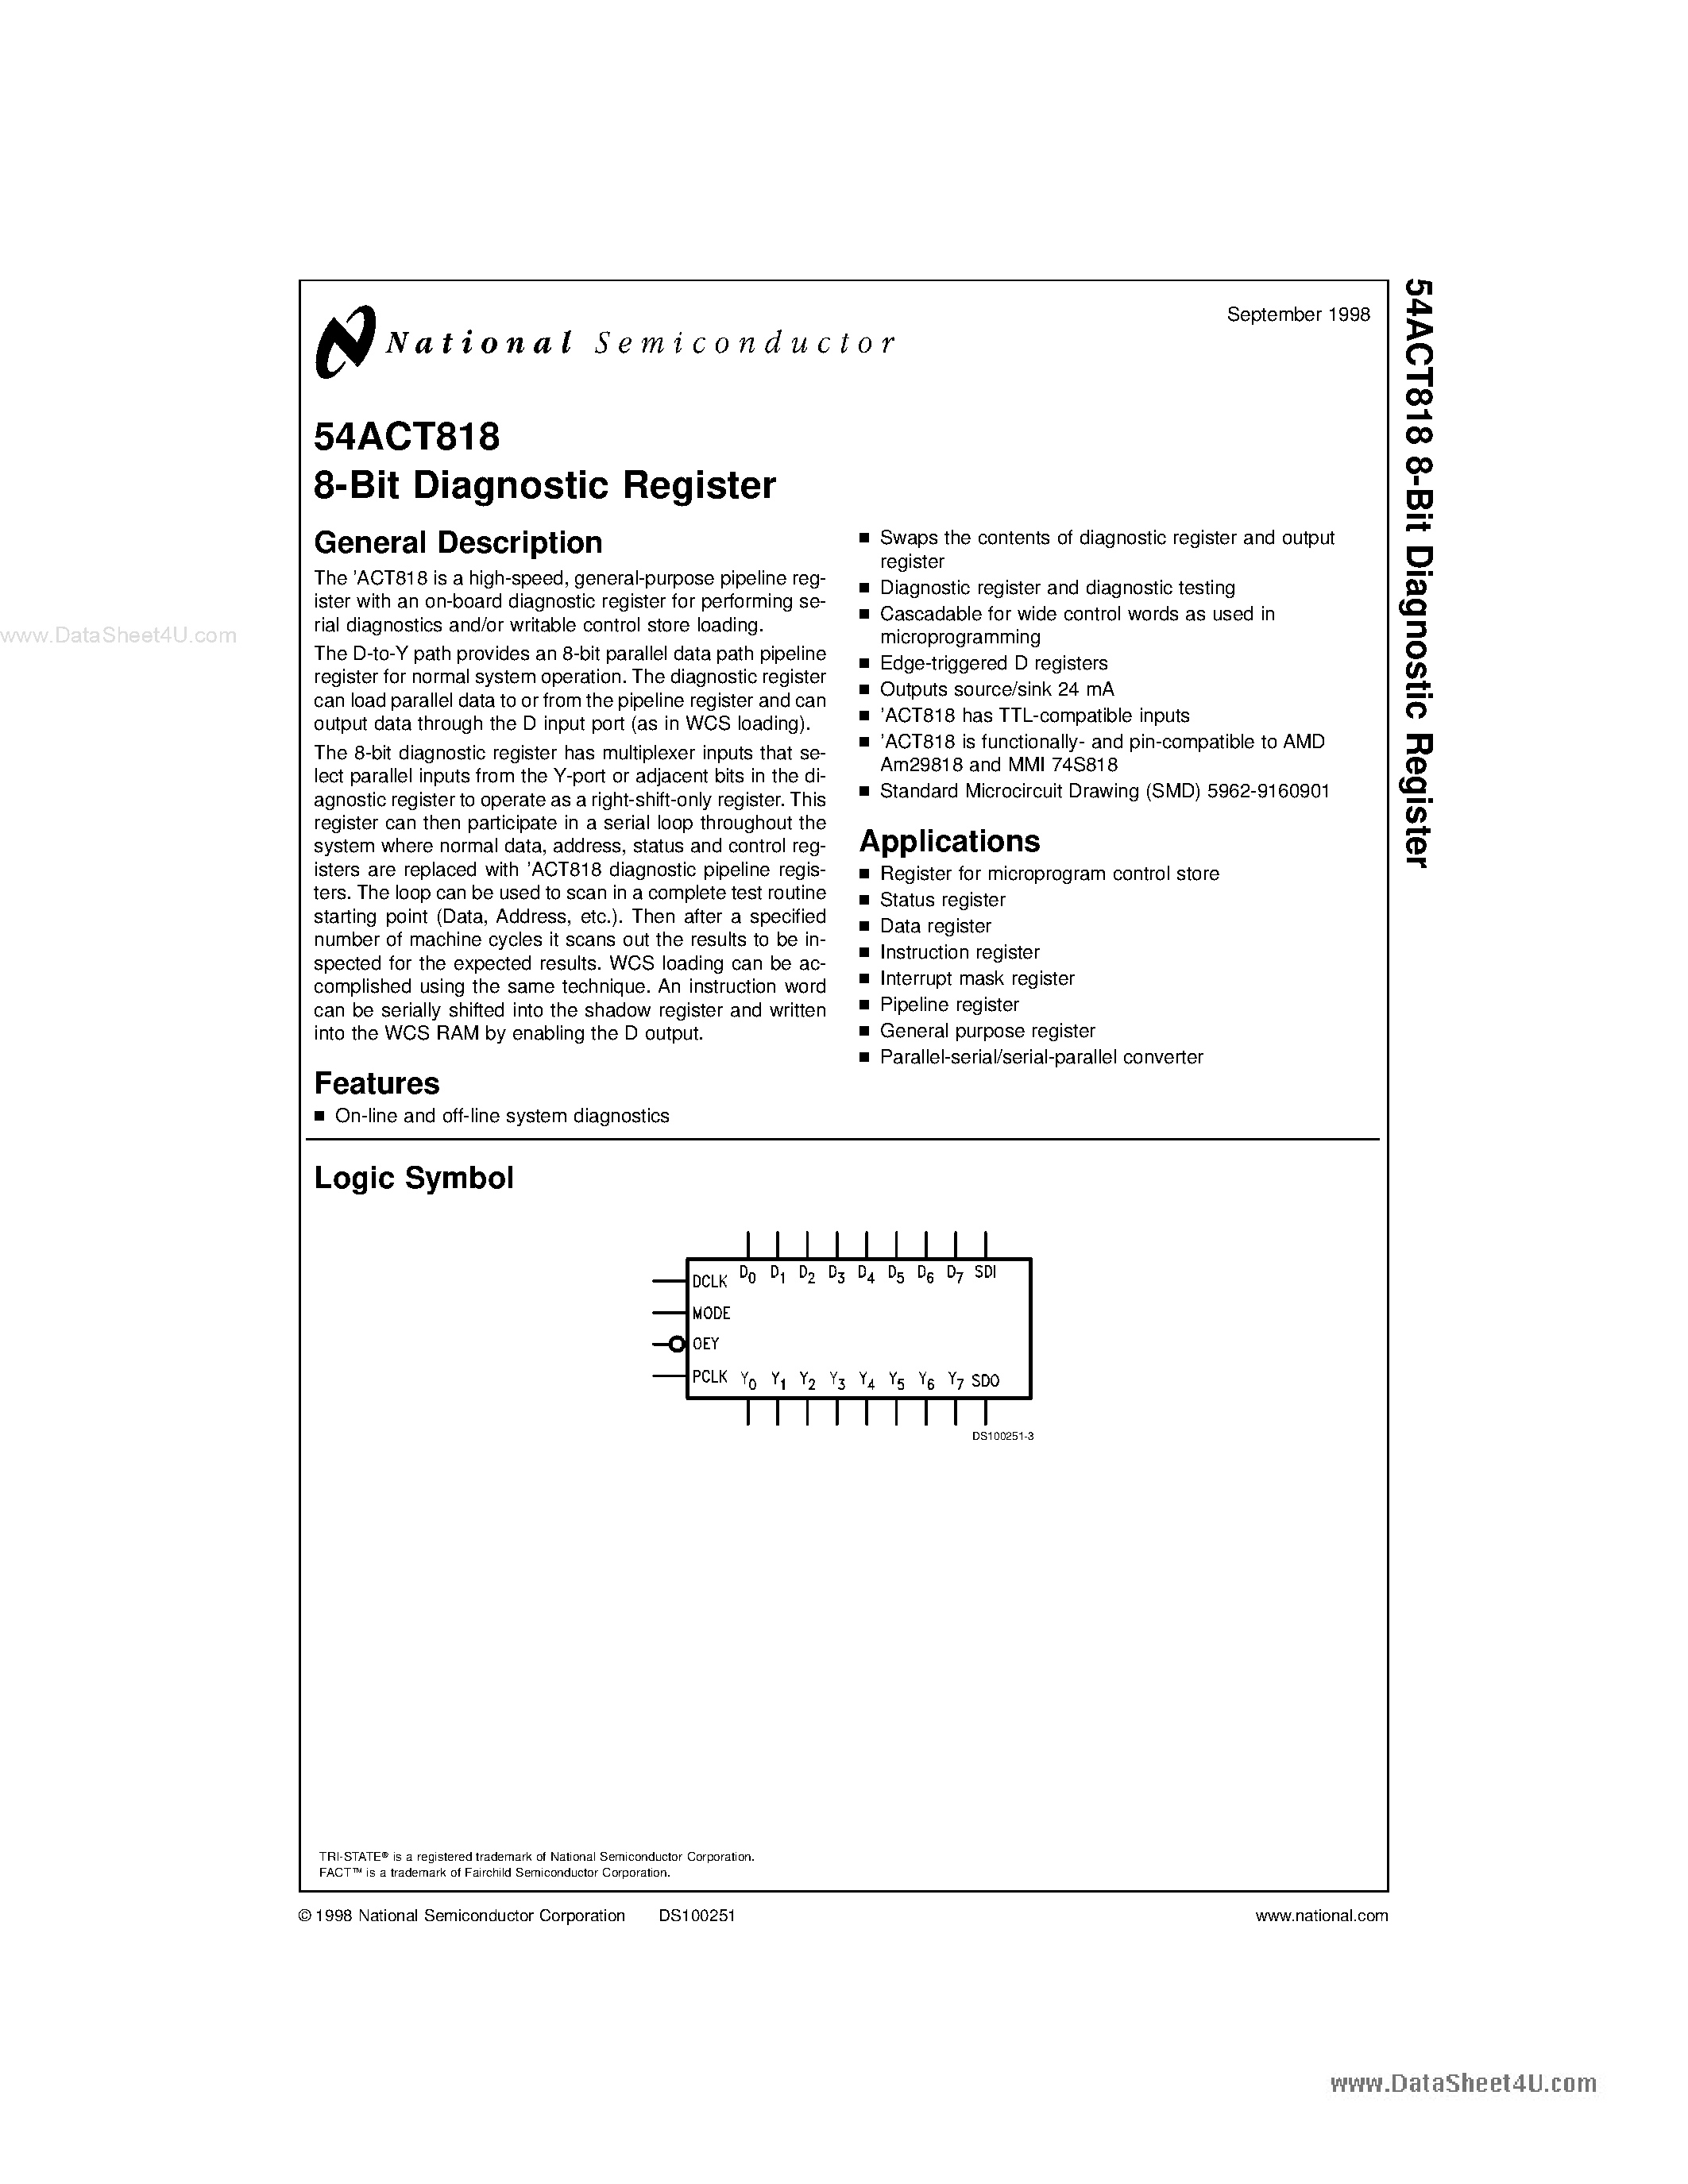 Datasheet 54ACT818 - 8-Bit Diagnostic Register page 1